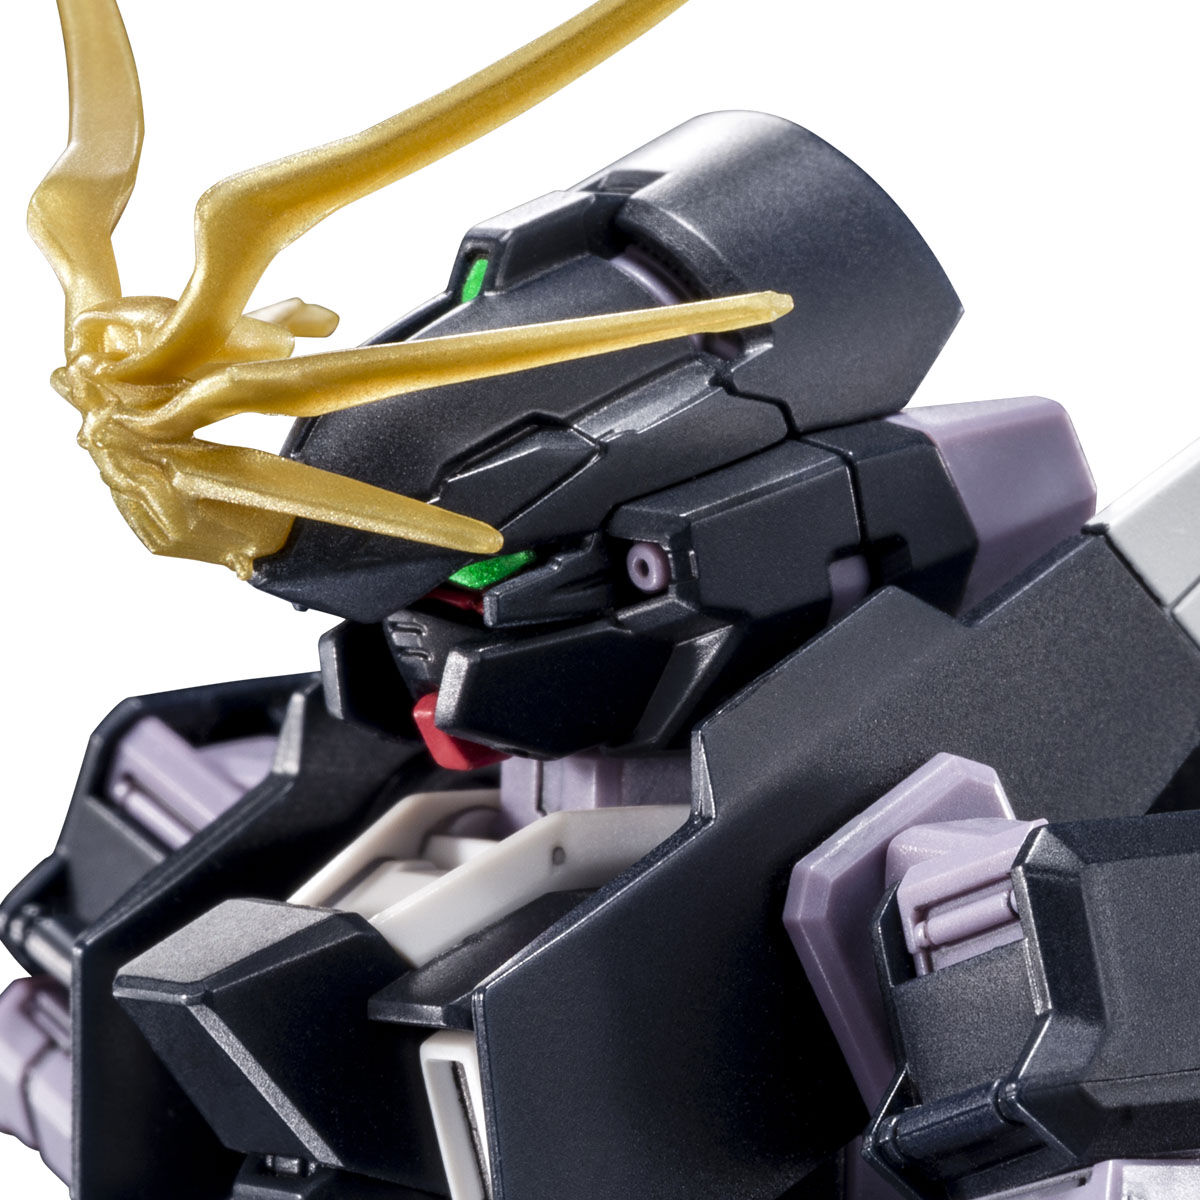 HGUC 1/144 ARZ-124 Gundam TR-6[Woundwort] Psycho Blade Custom(A.O.Z. Re-Boot)